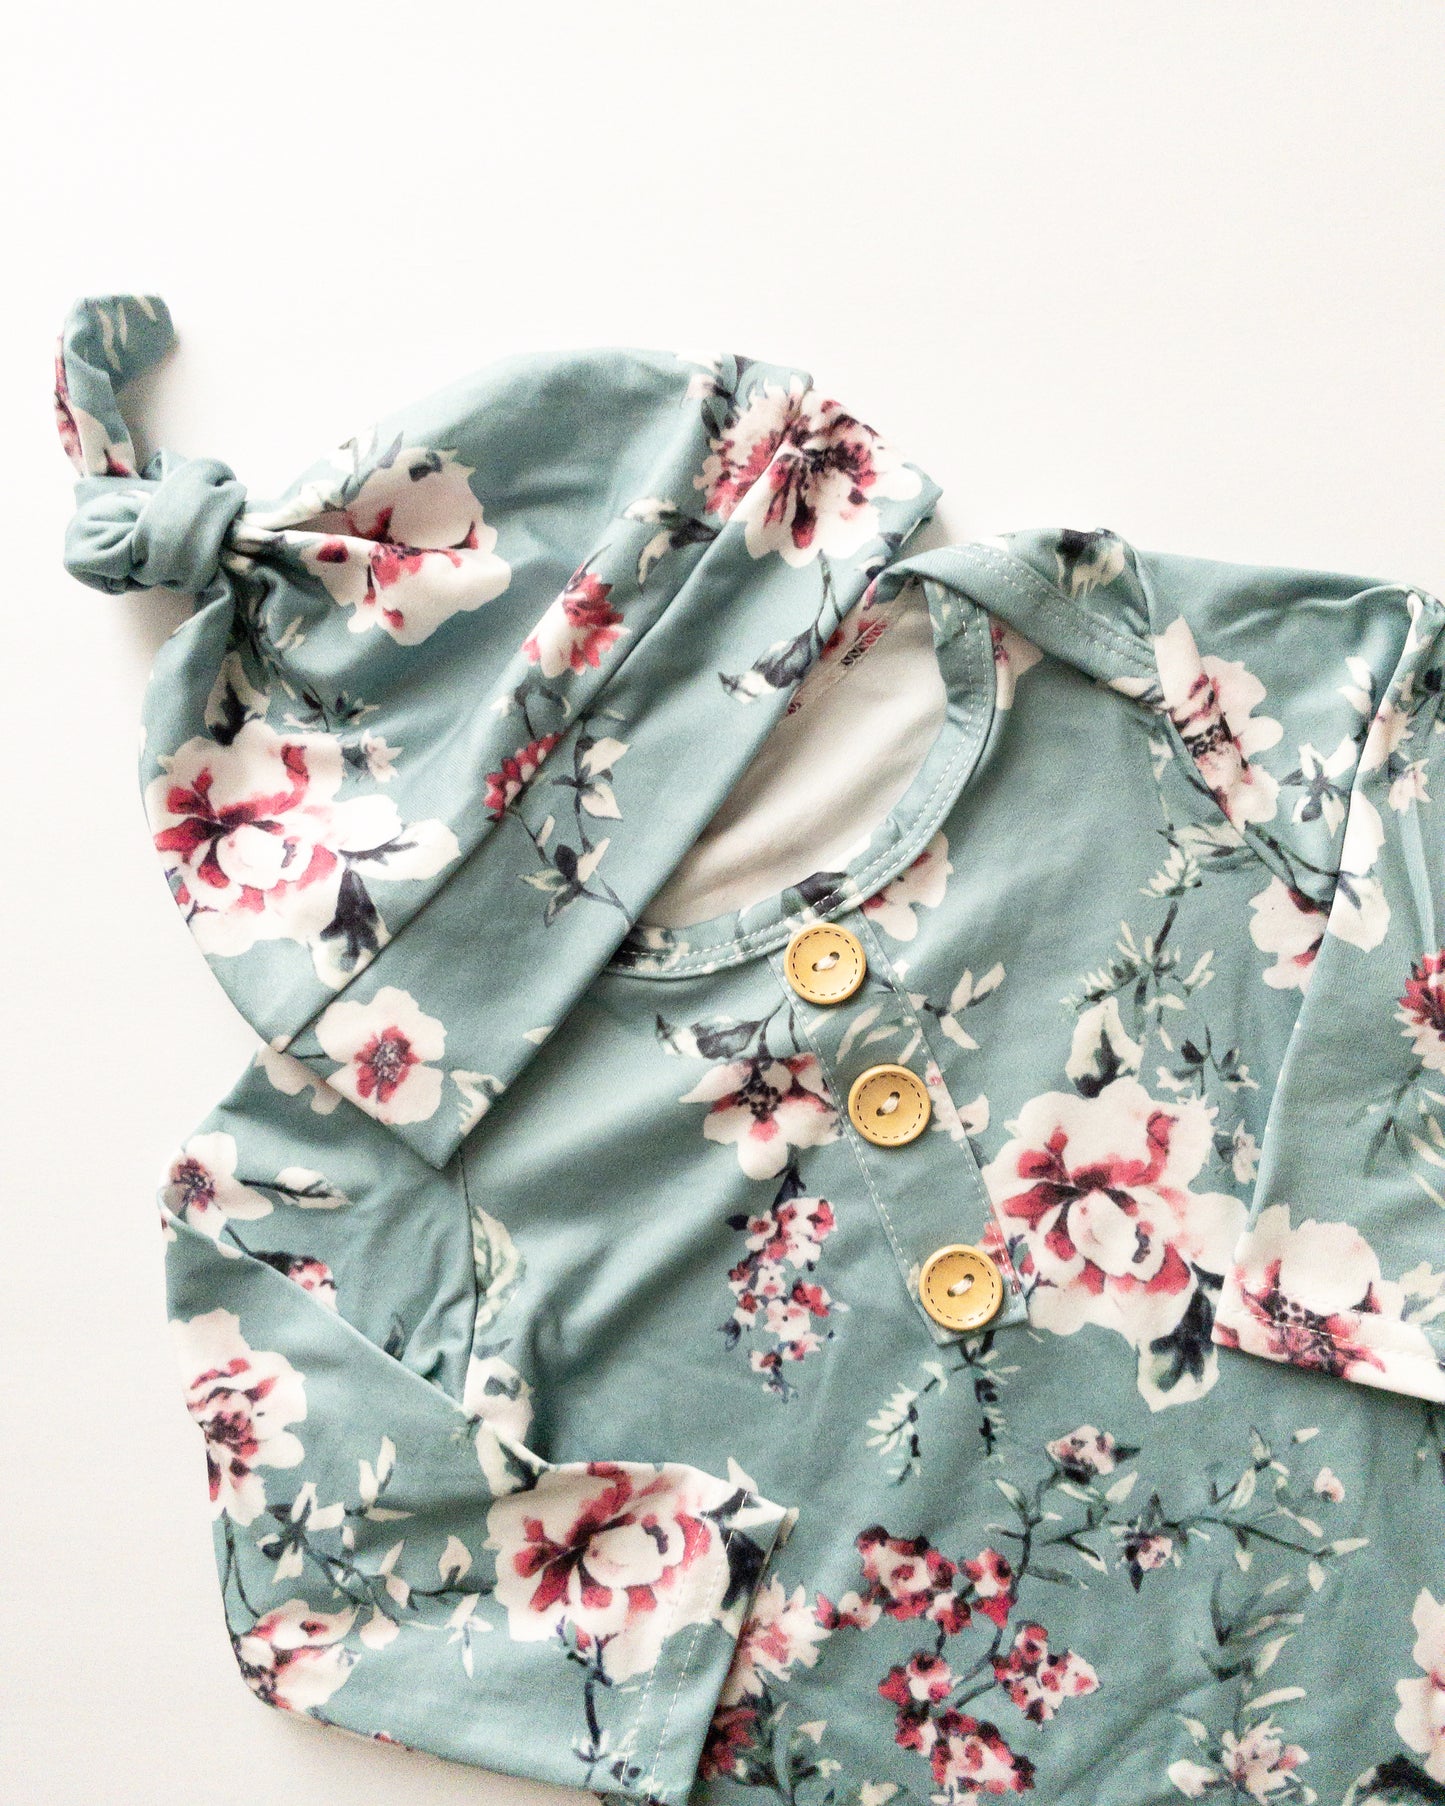 Aqua Floral Baby Sleeping Gown